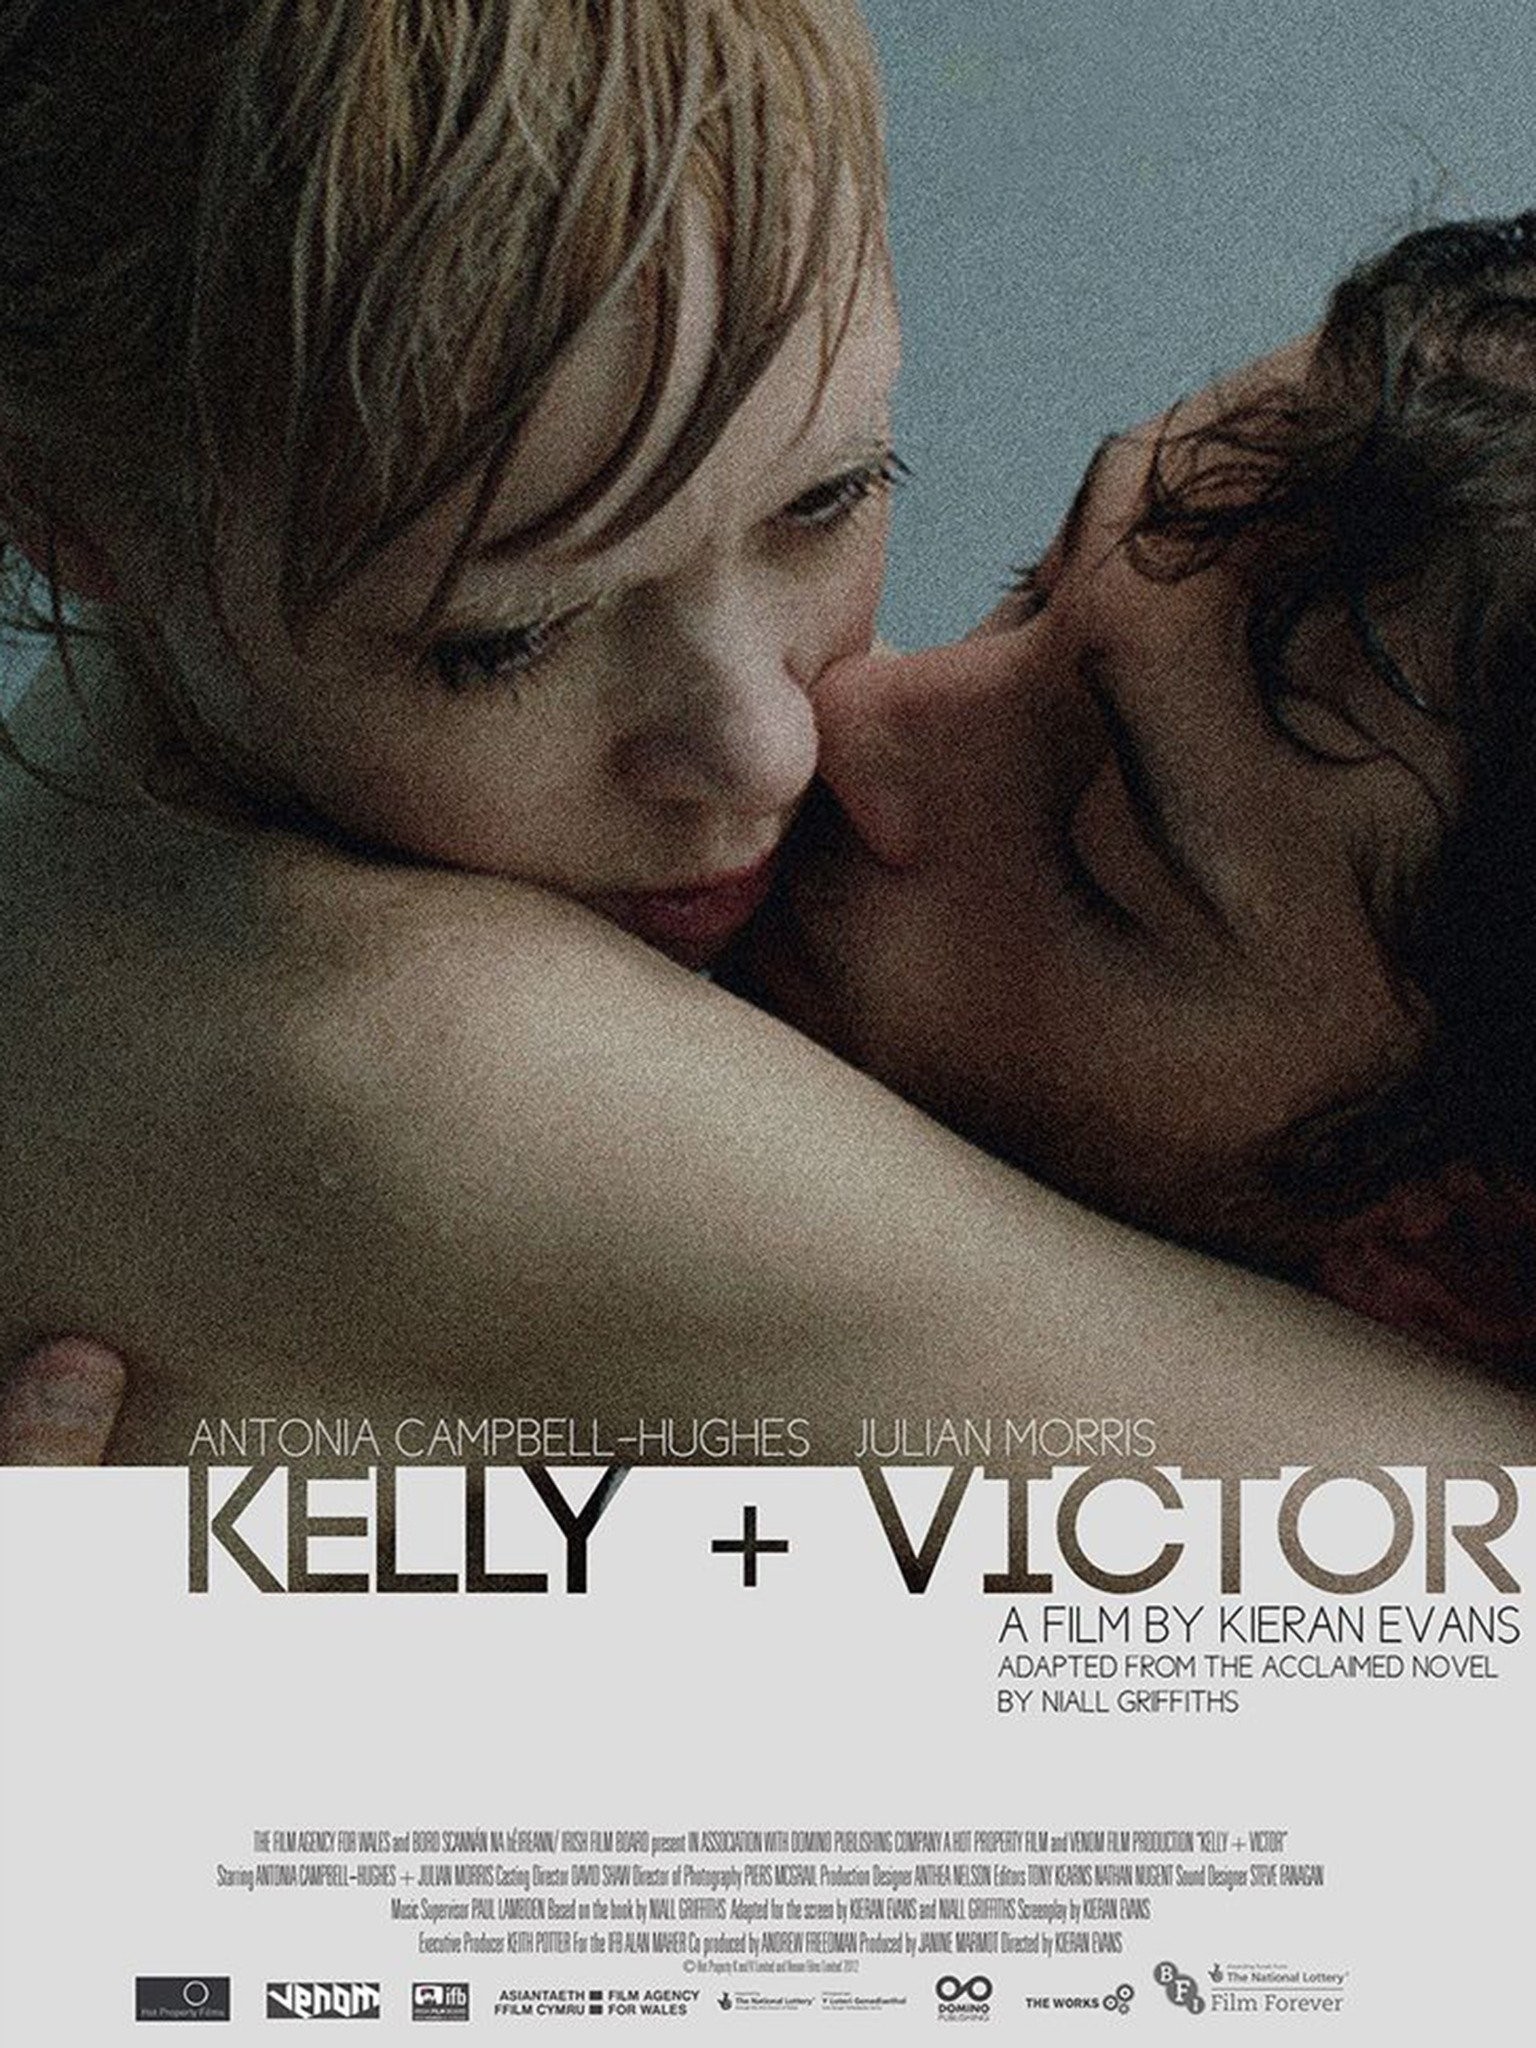 Kelly + victor movie